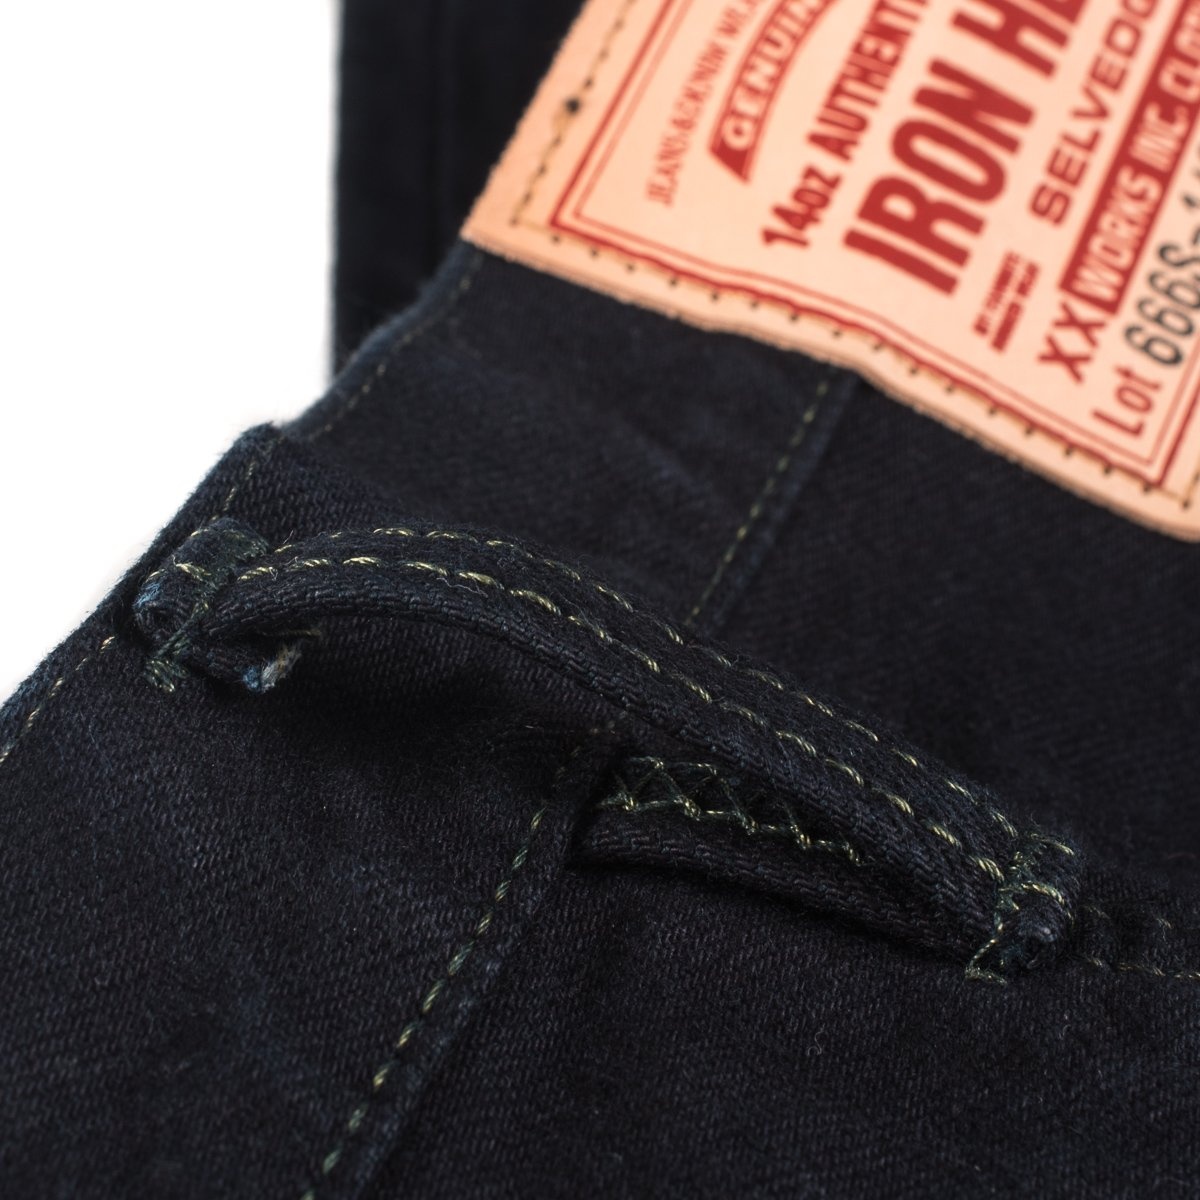 IH-666S-142od 14oz Selvedge Denim Slim Straight Cut Jeans - Indigo Overdyed Black - 14